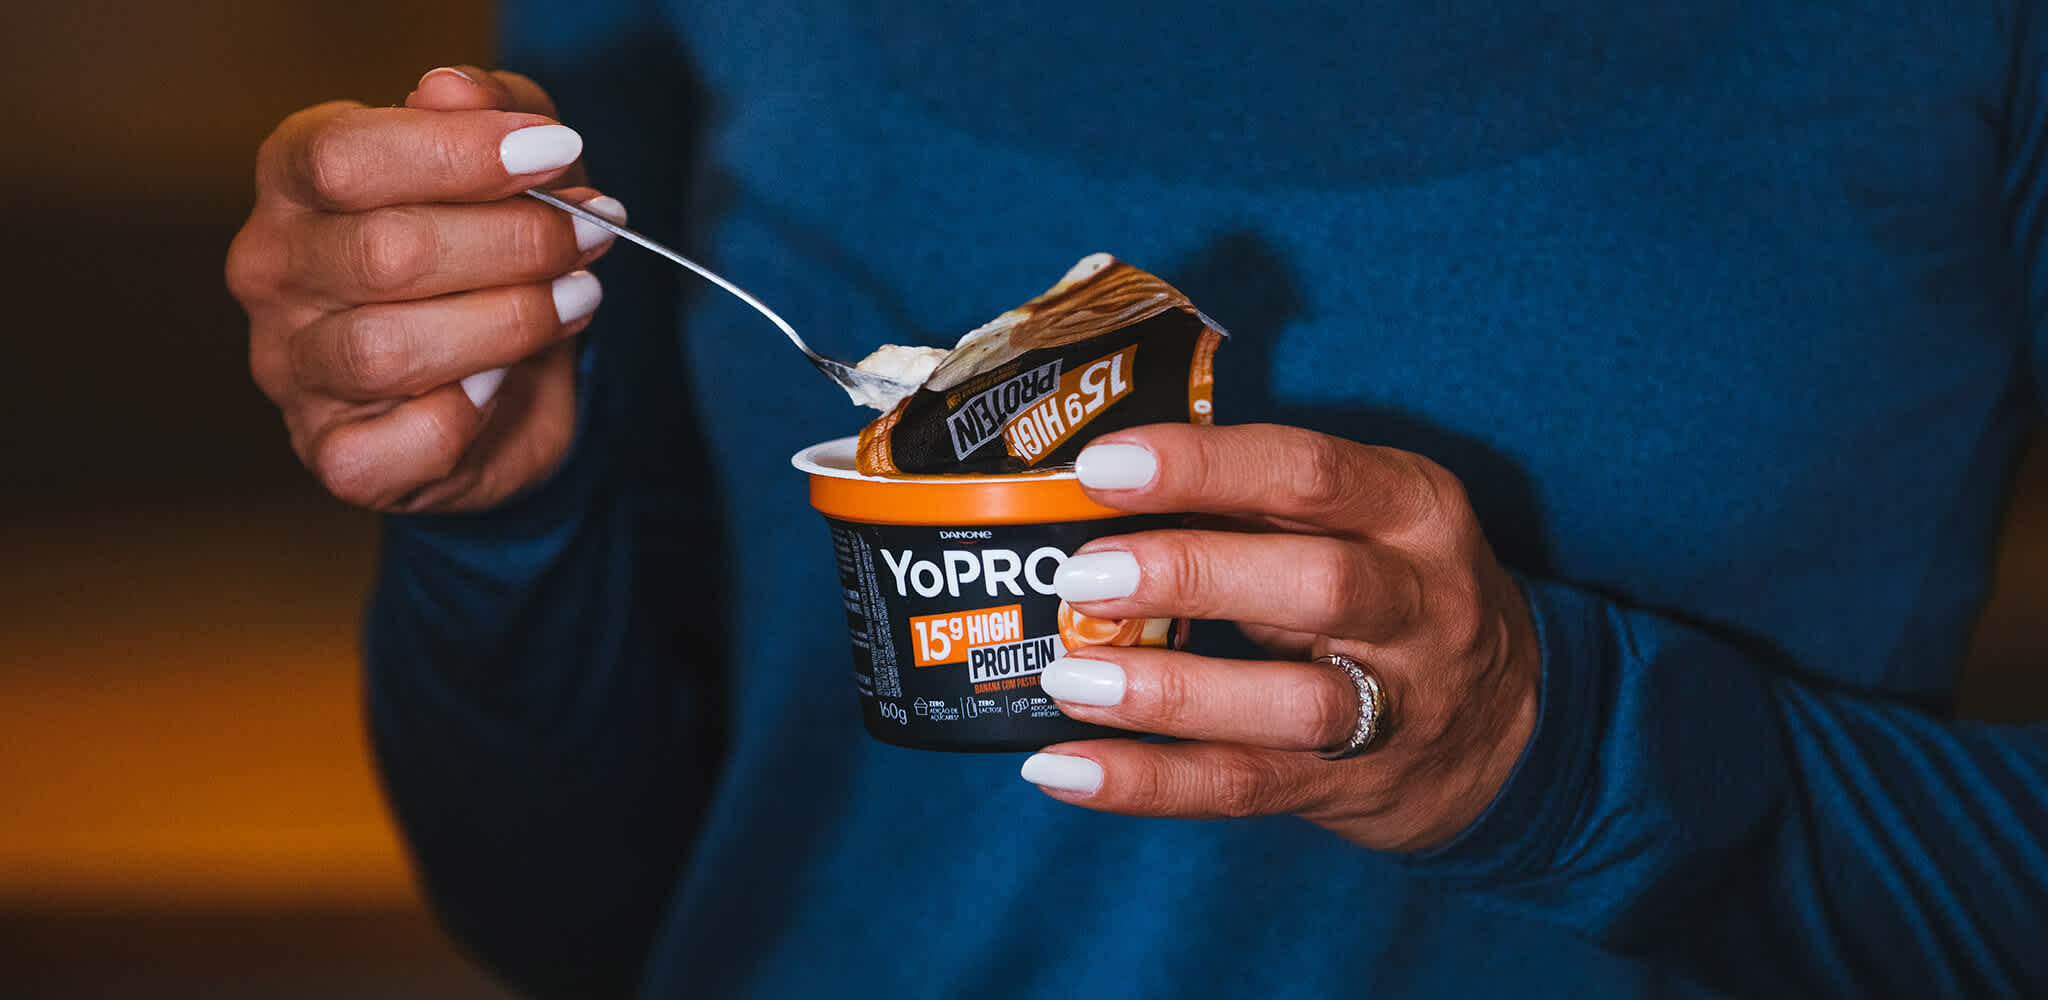 Mulher consome iogurte YoPRO